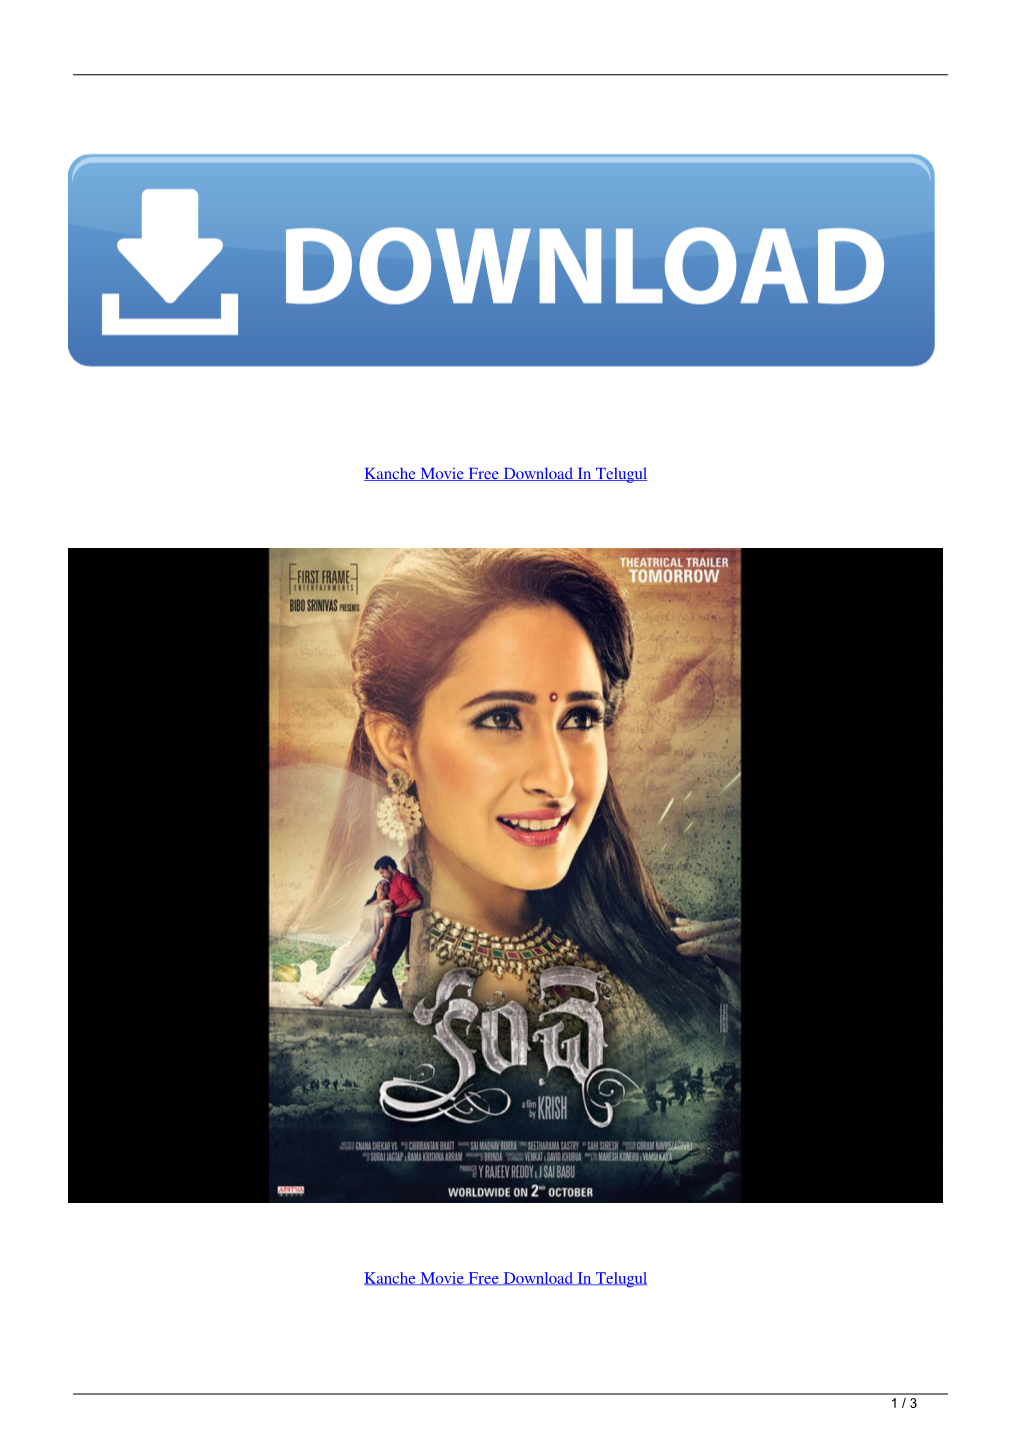 Kanche Movie Free Download in Telugul